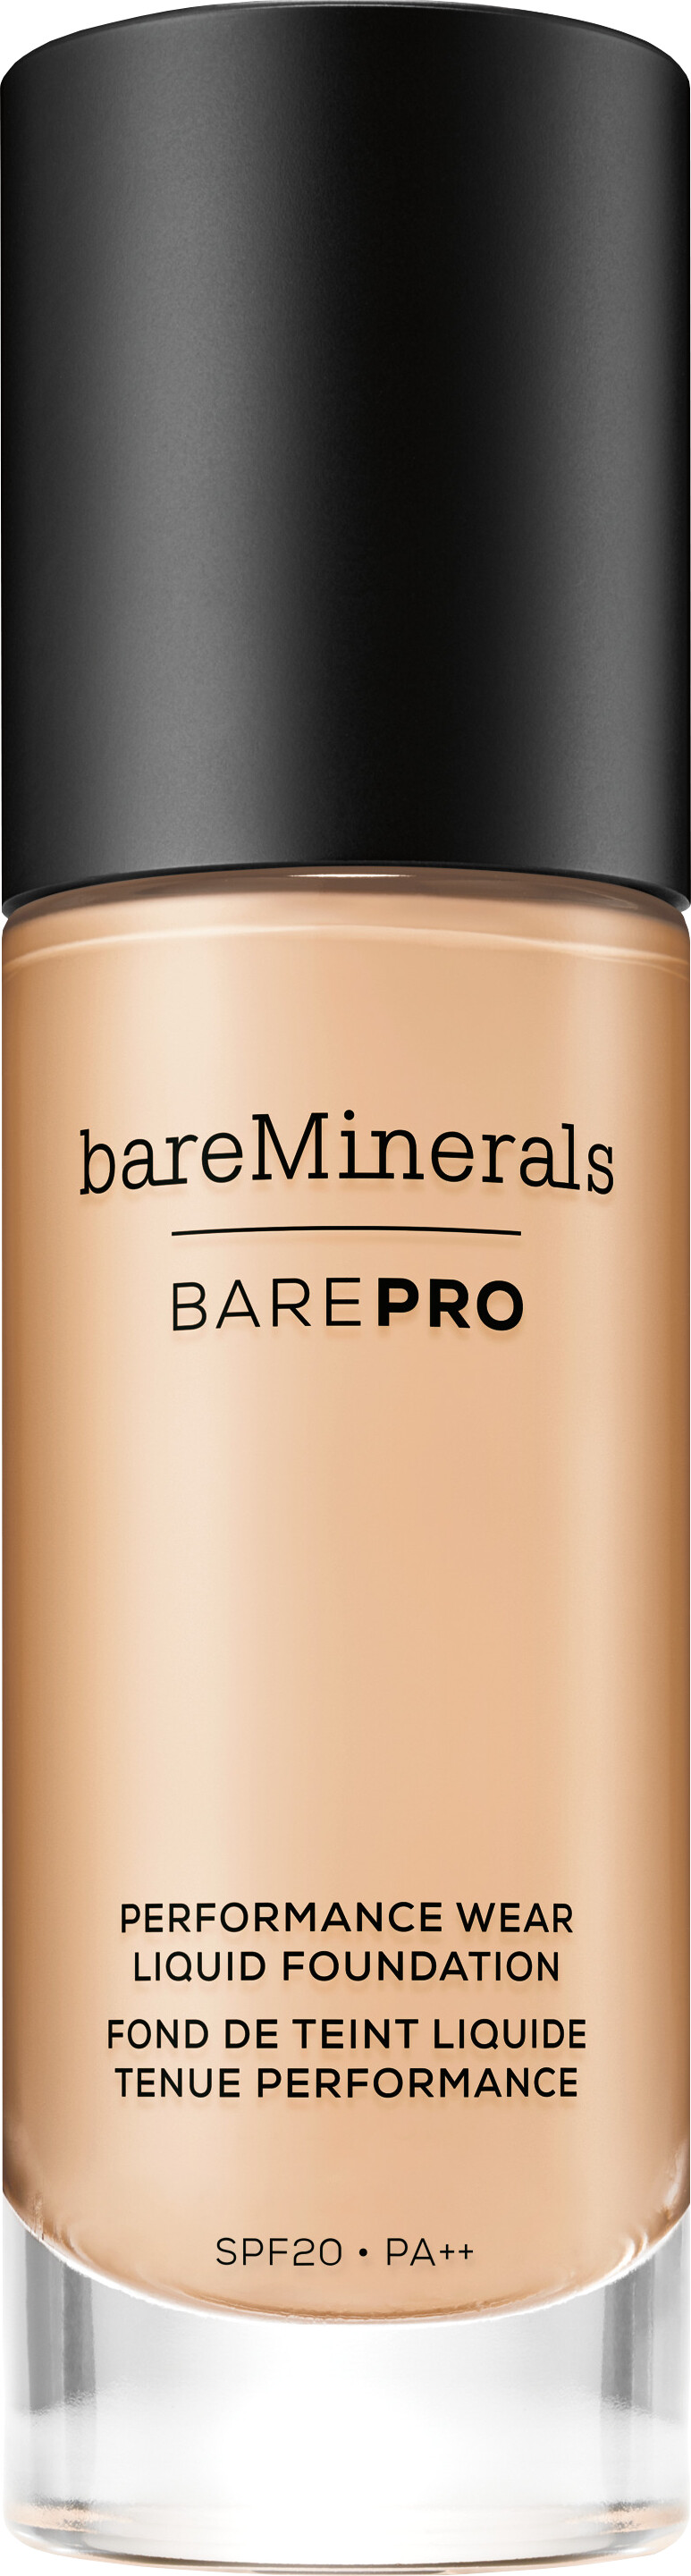 bareMinerals BAREPRO Performance Wear Liquid Foundation SPF20 30ml 02 - Ivory